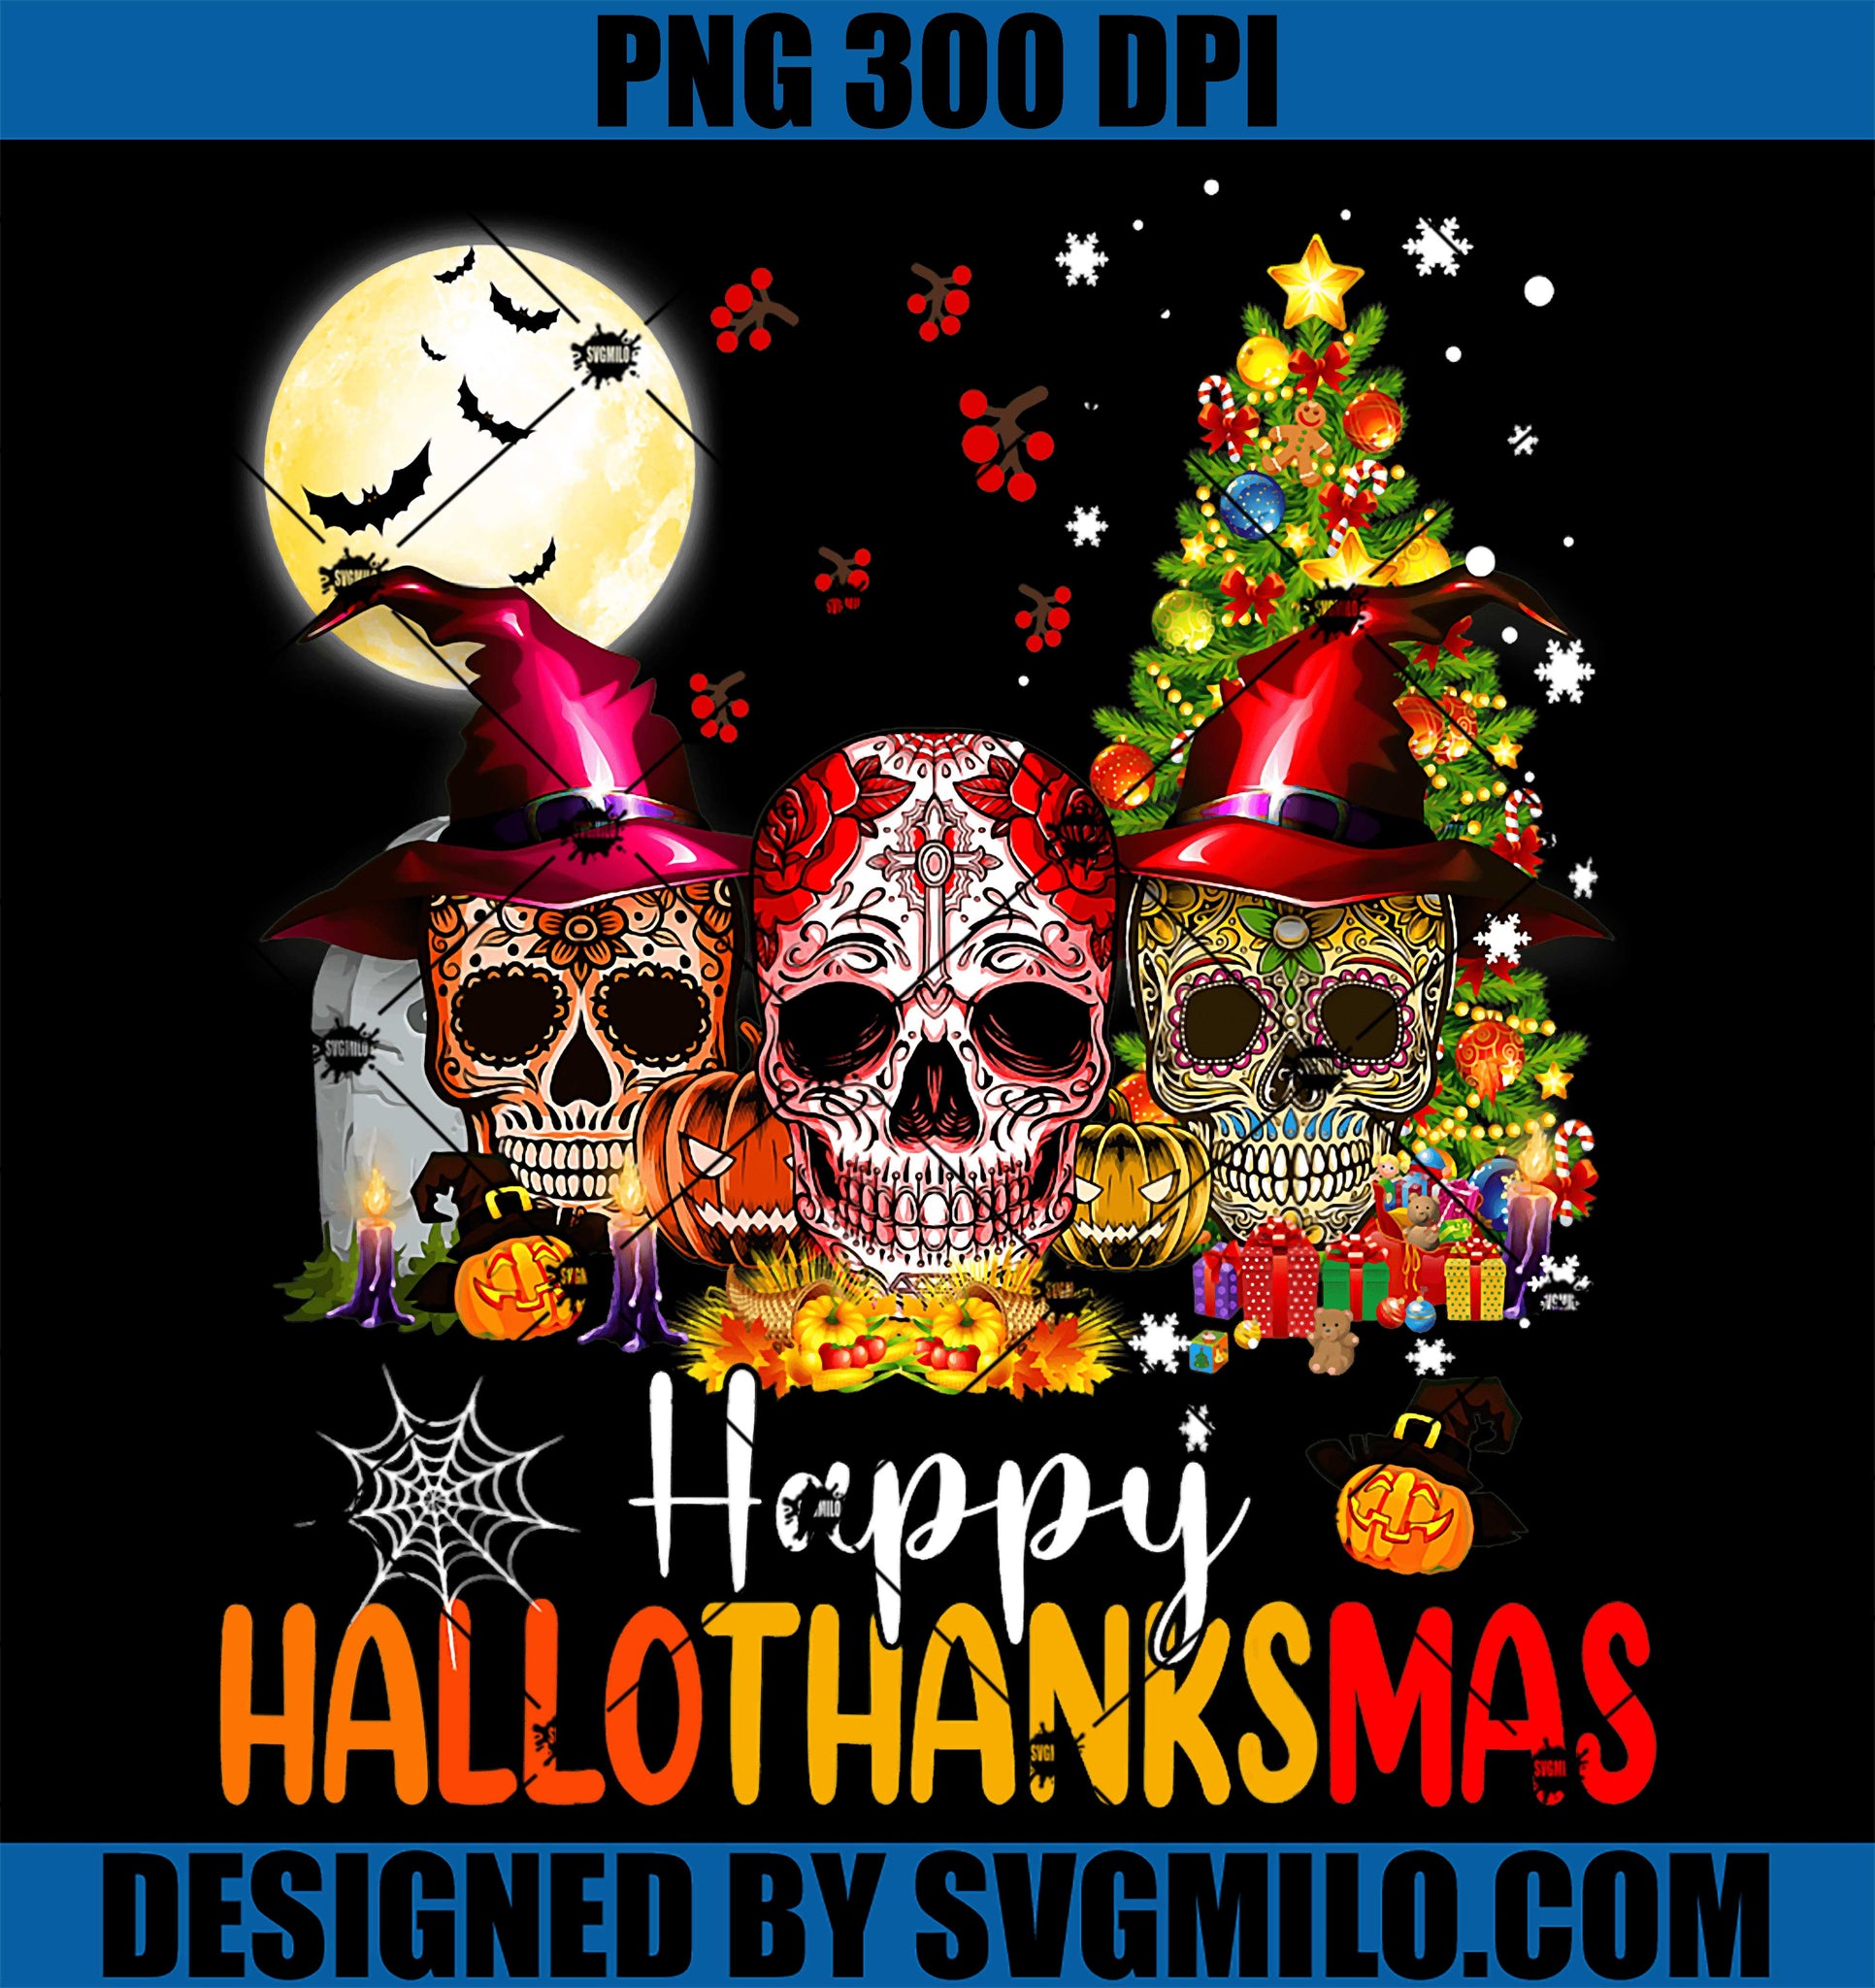 Sugar Skull Skeleton Halloween PNG, Xmas Happy Hallothanksmas PNG